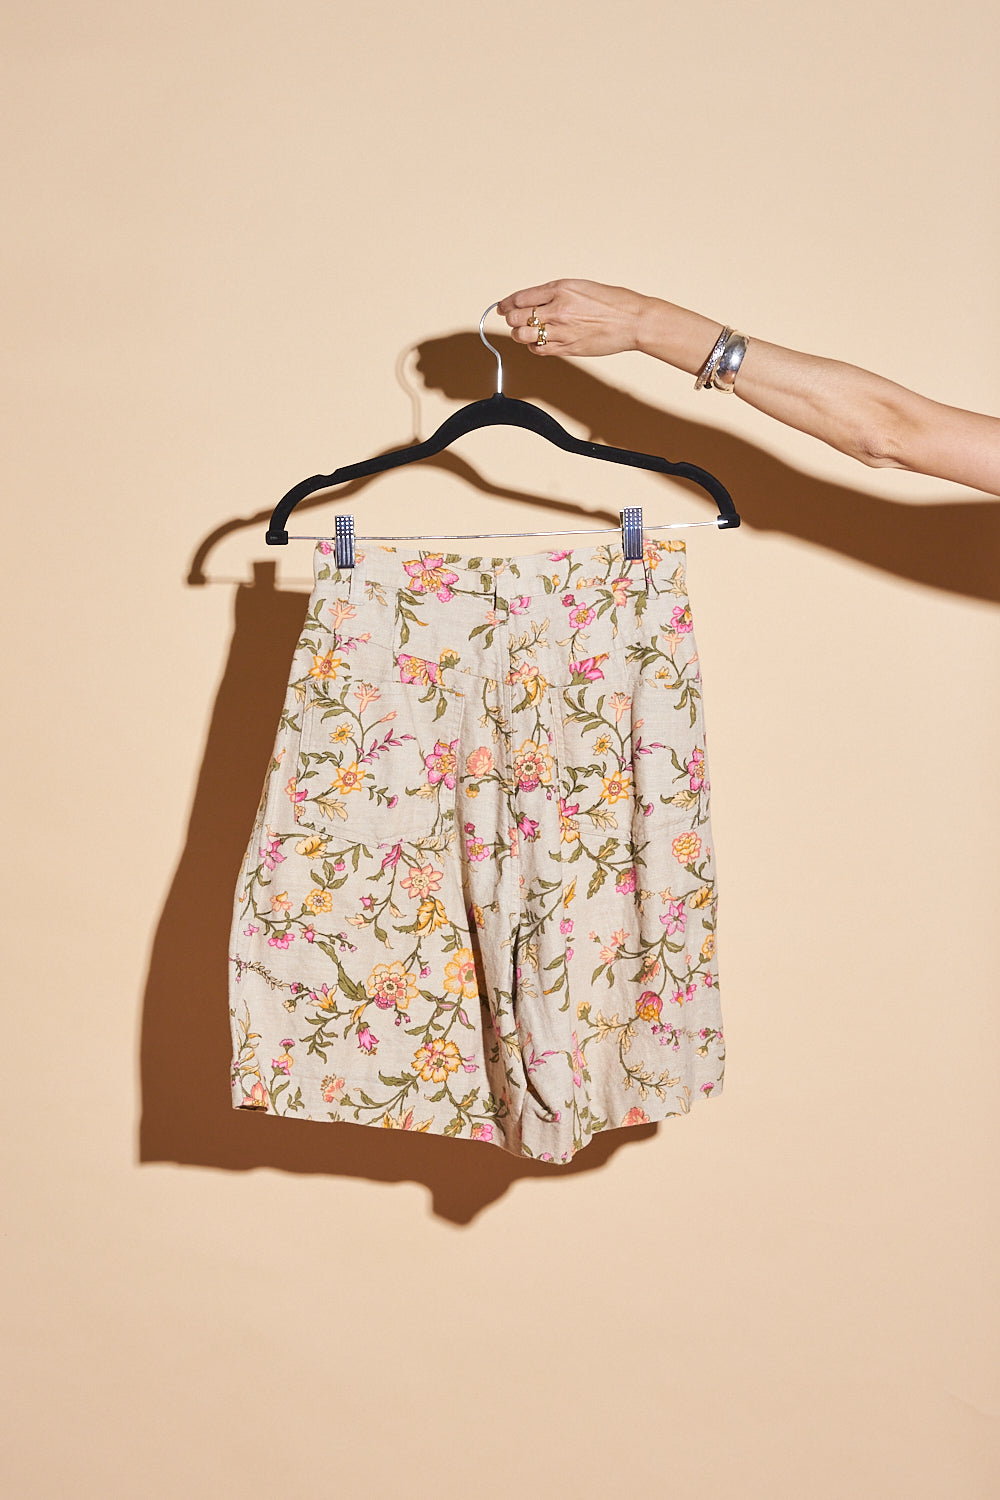 Vintage Floral Linen Blend Shorts, Sz 27" Waist